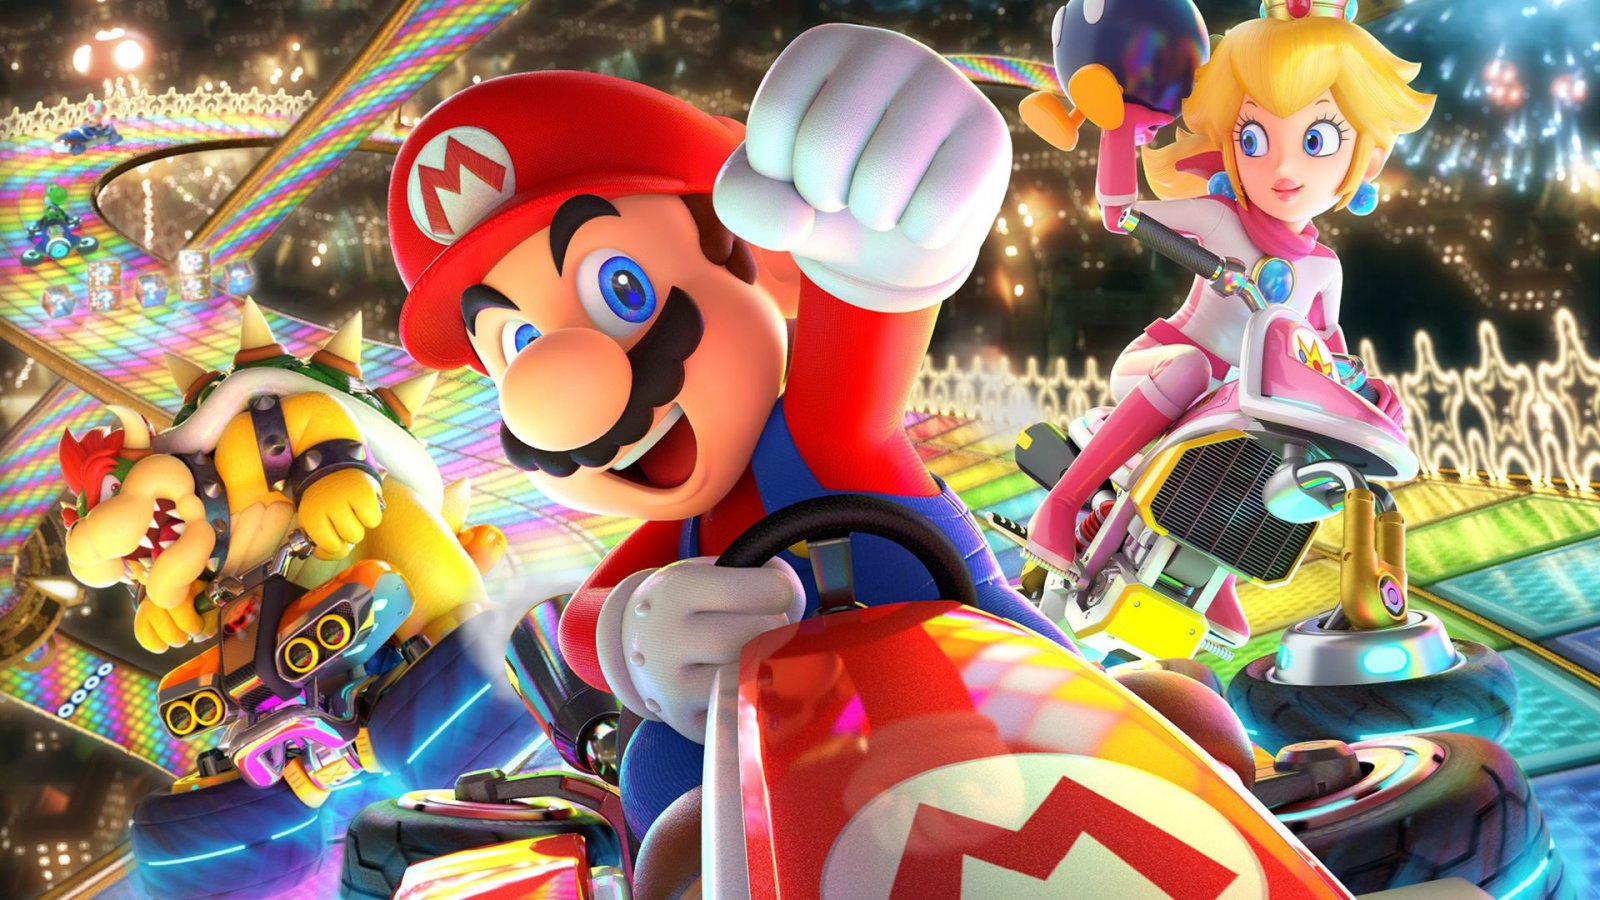 Classifica Nintendo eShop, Mario Kart 8 Deluxe riprende il comando